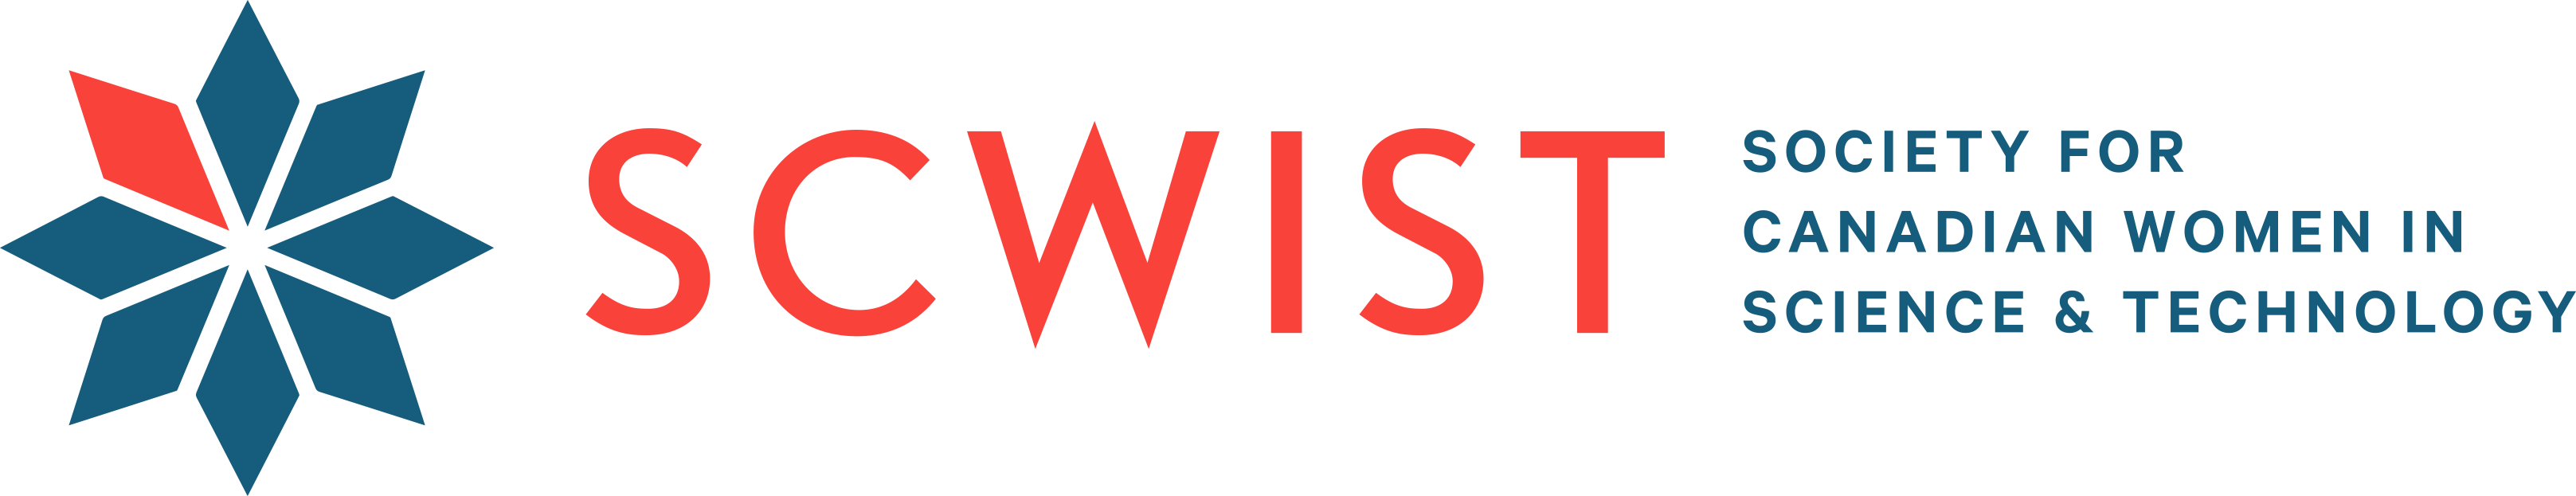 scwist logo